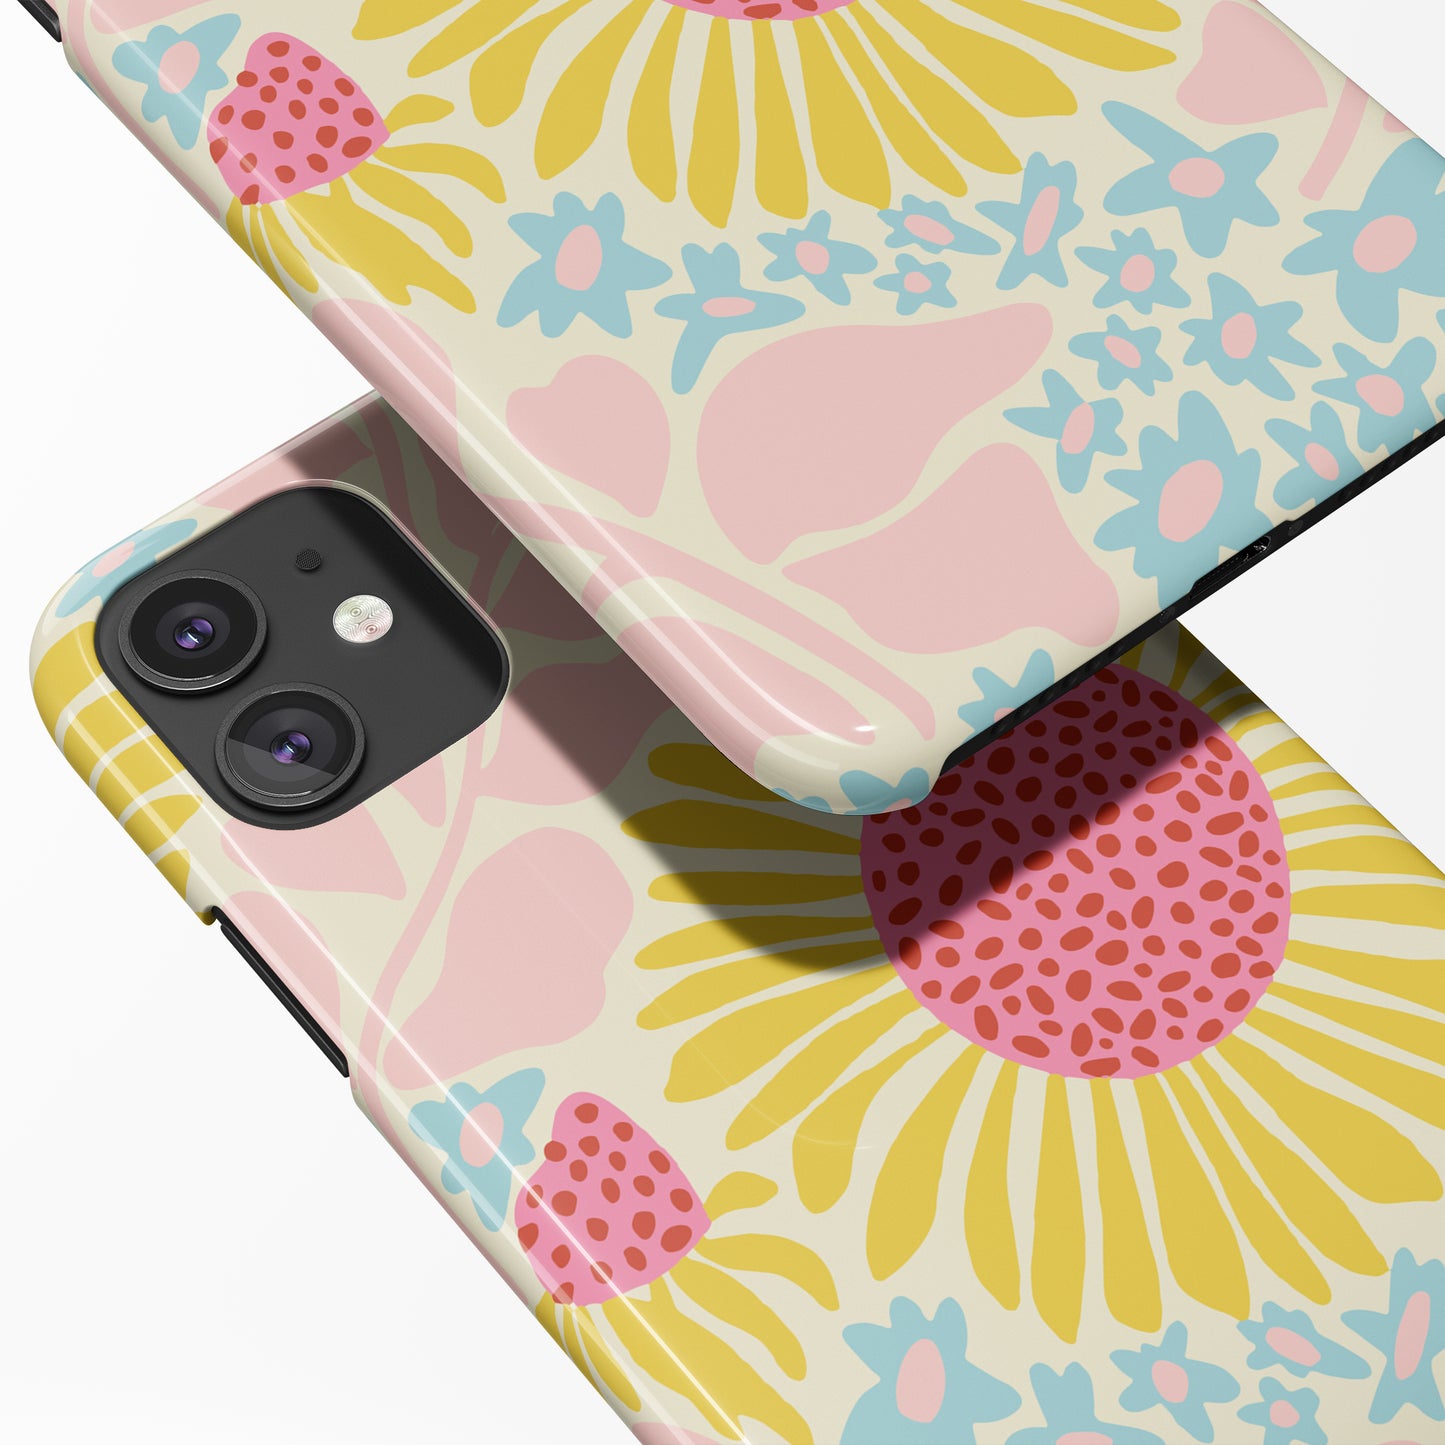 Cute Floral iPhone Case